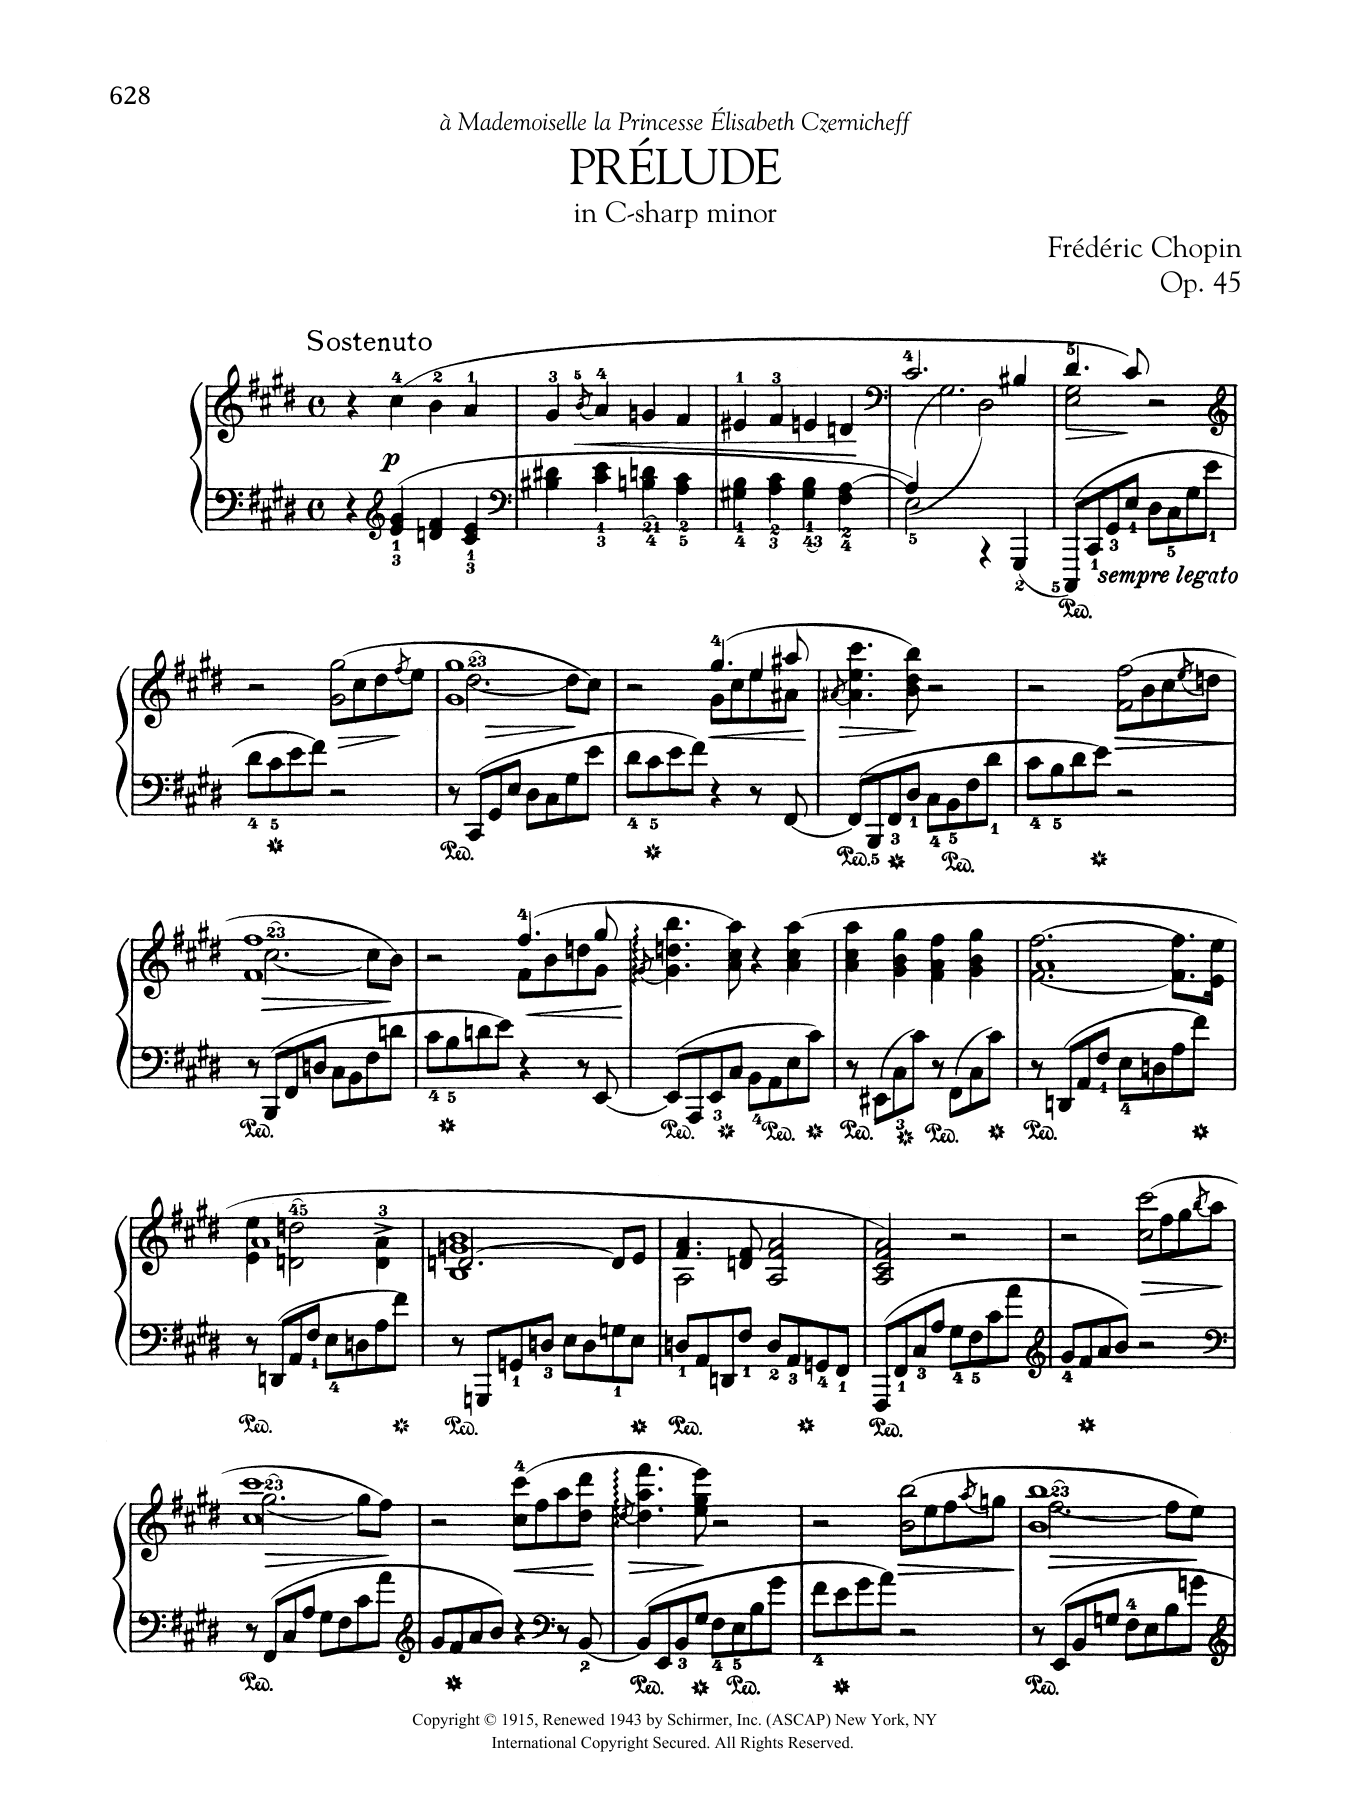 Prlude in C-sharp minor, Op. 45 (Piano Solo) von Frdric Chopin